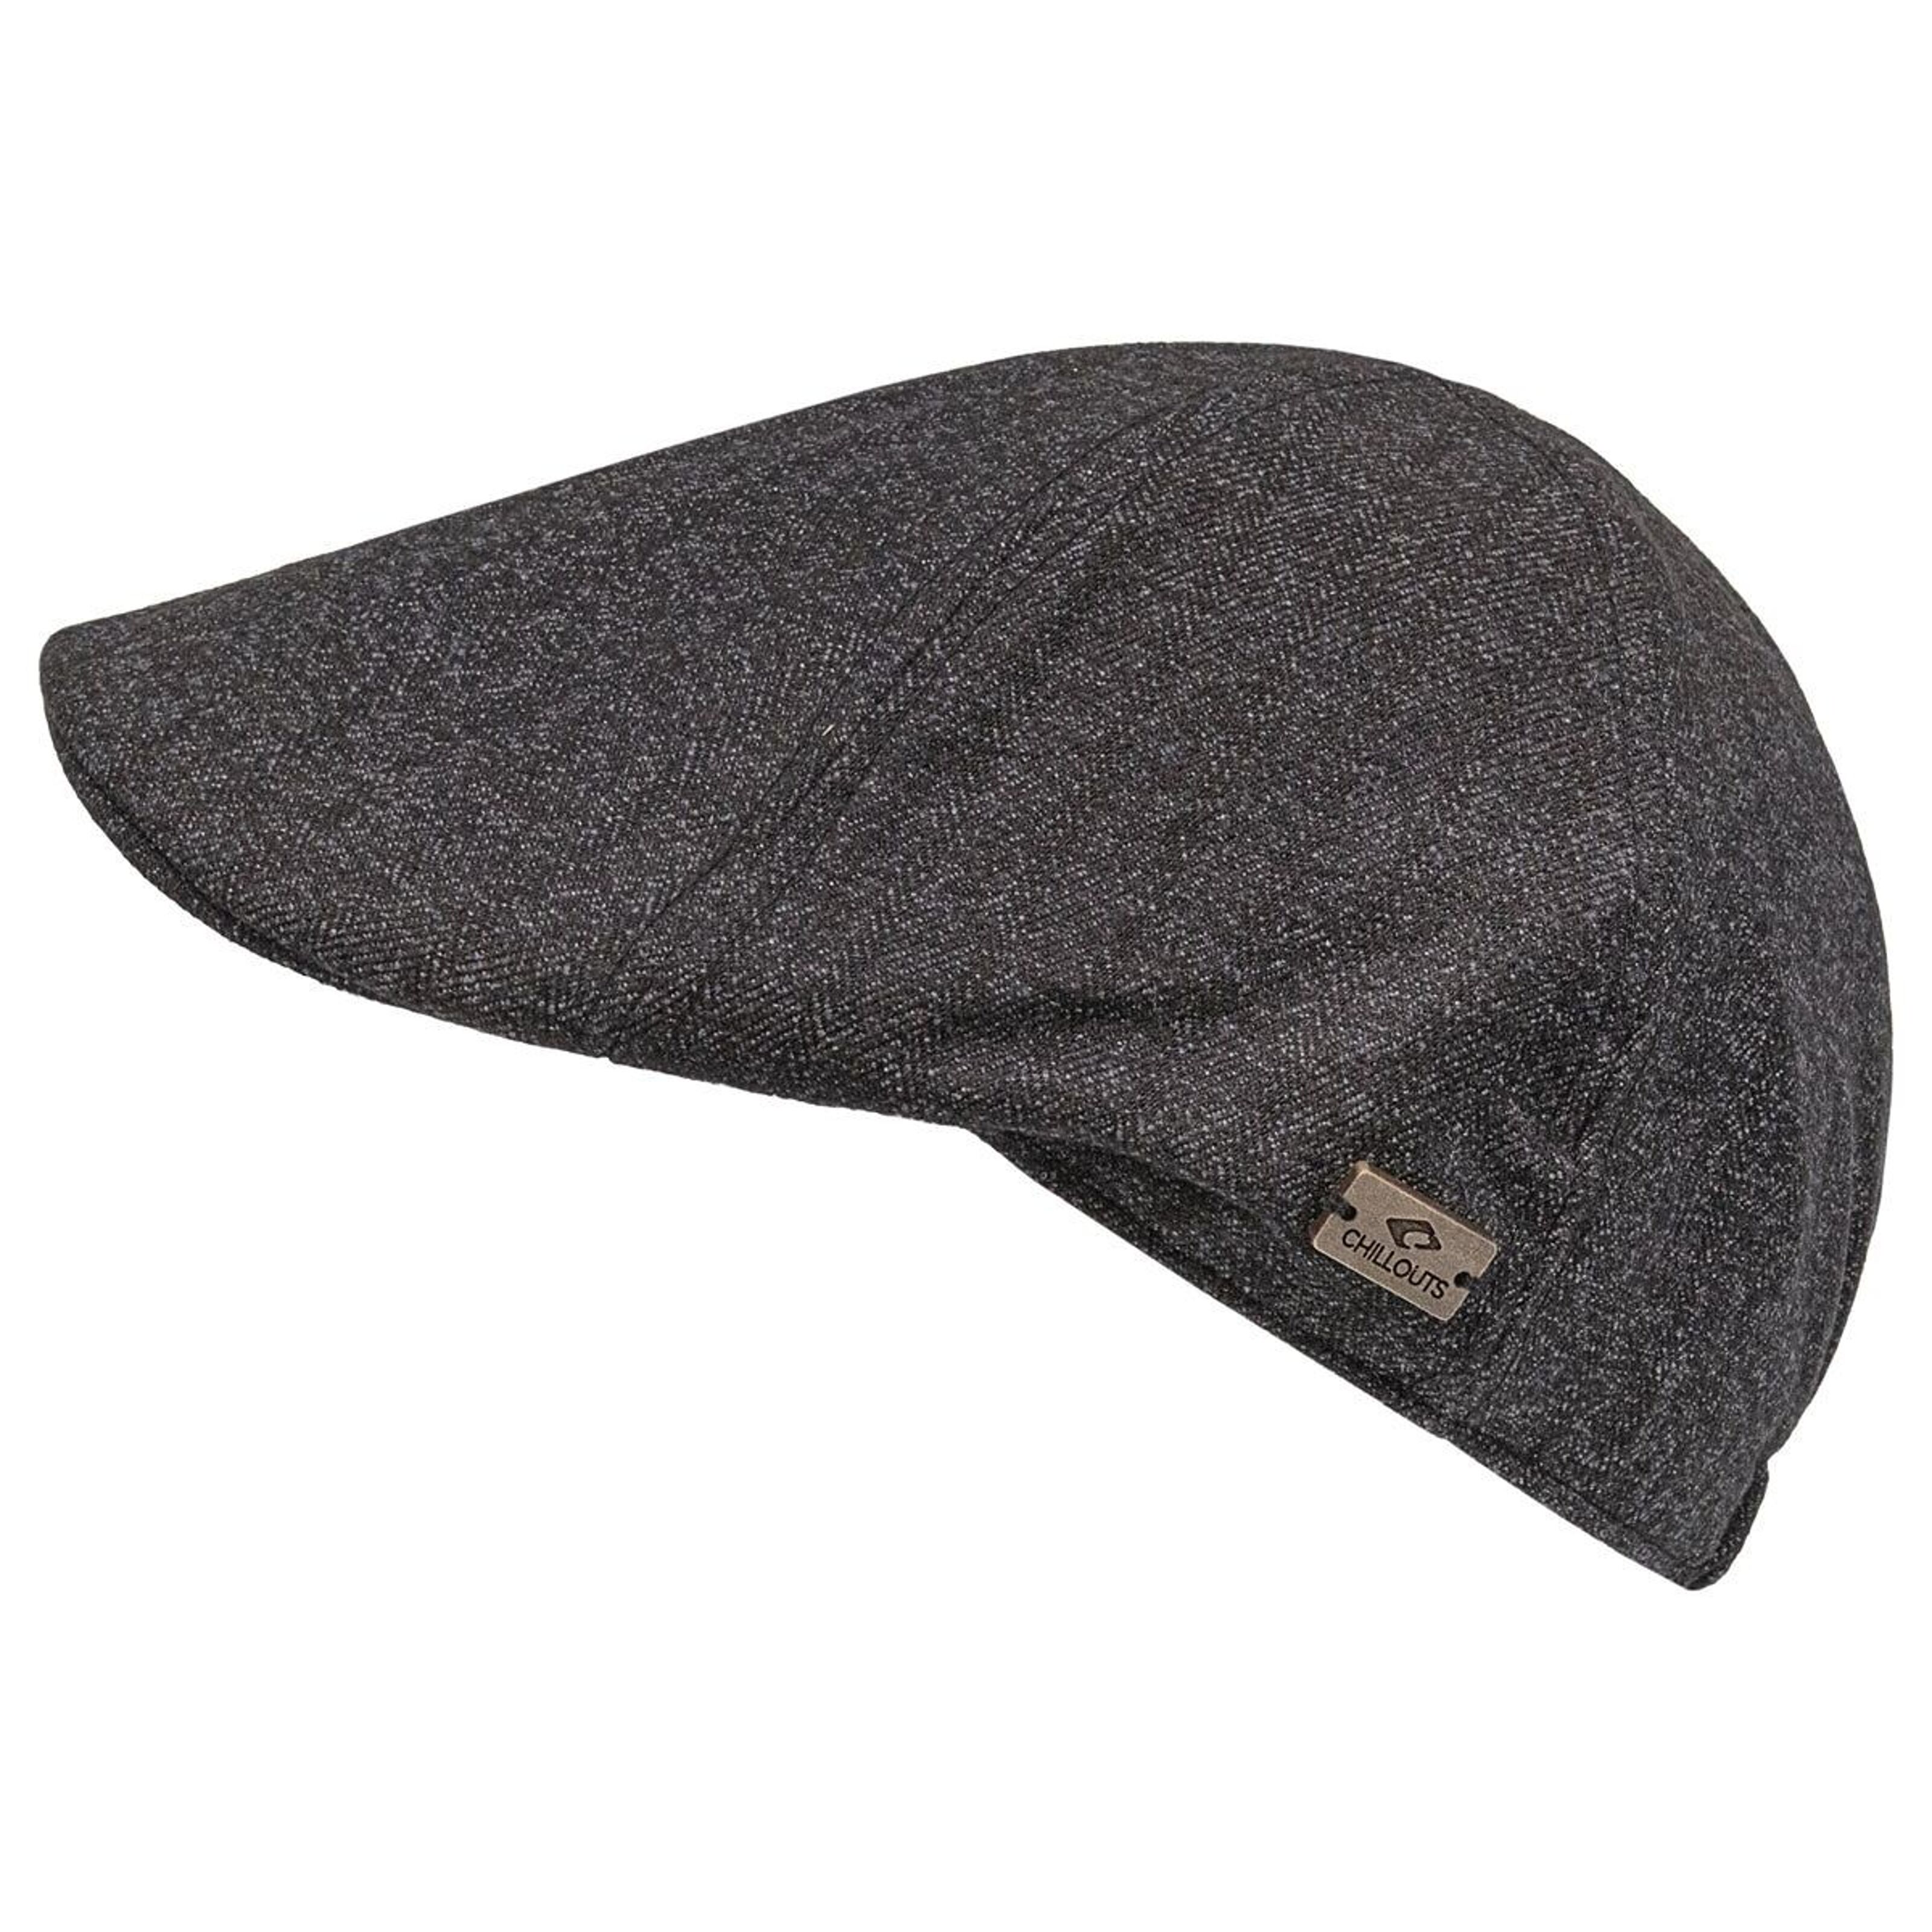 Buy wholesale Flat Hat Cap Elliot